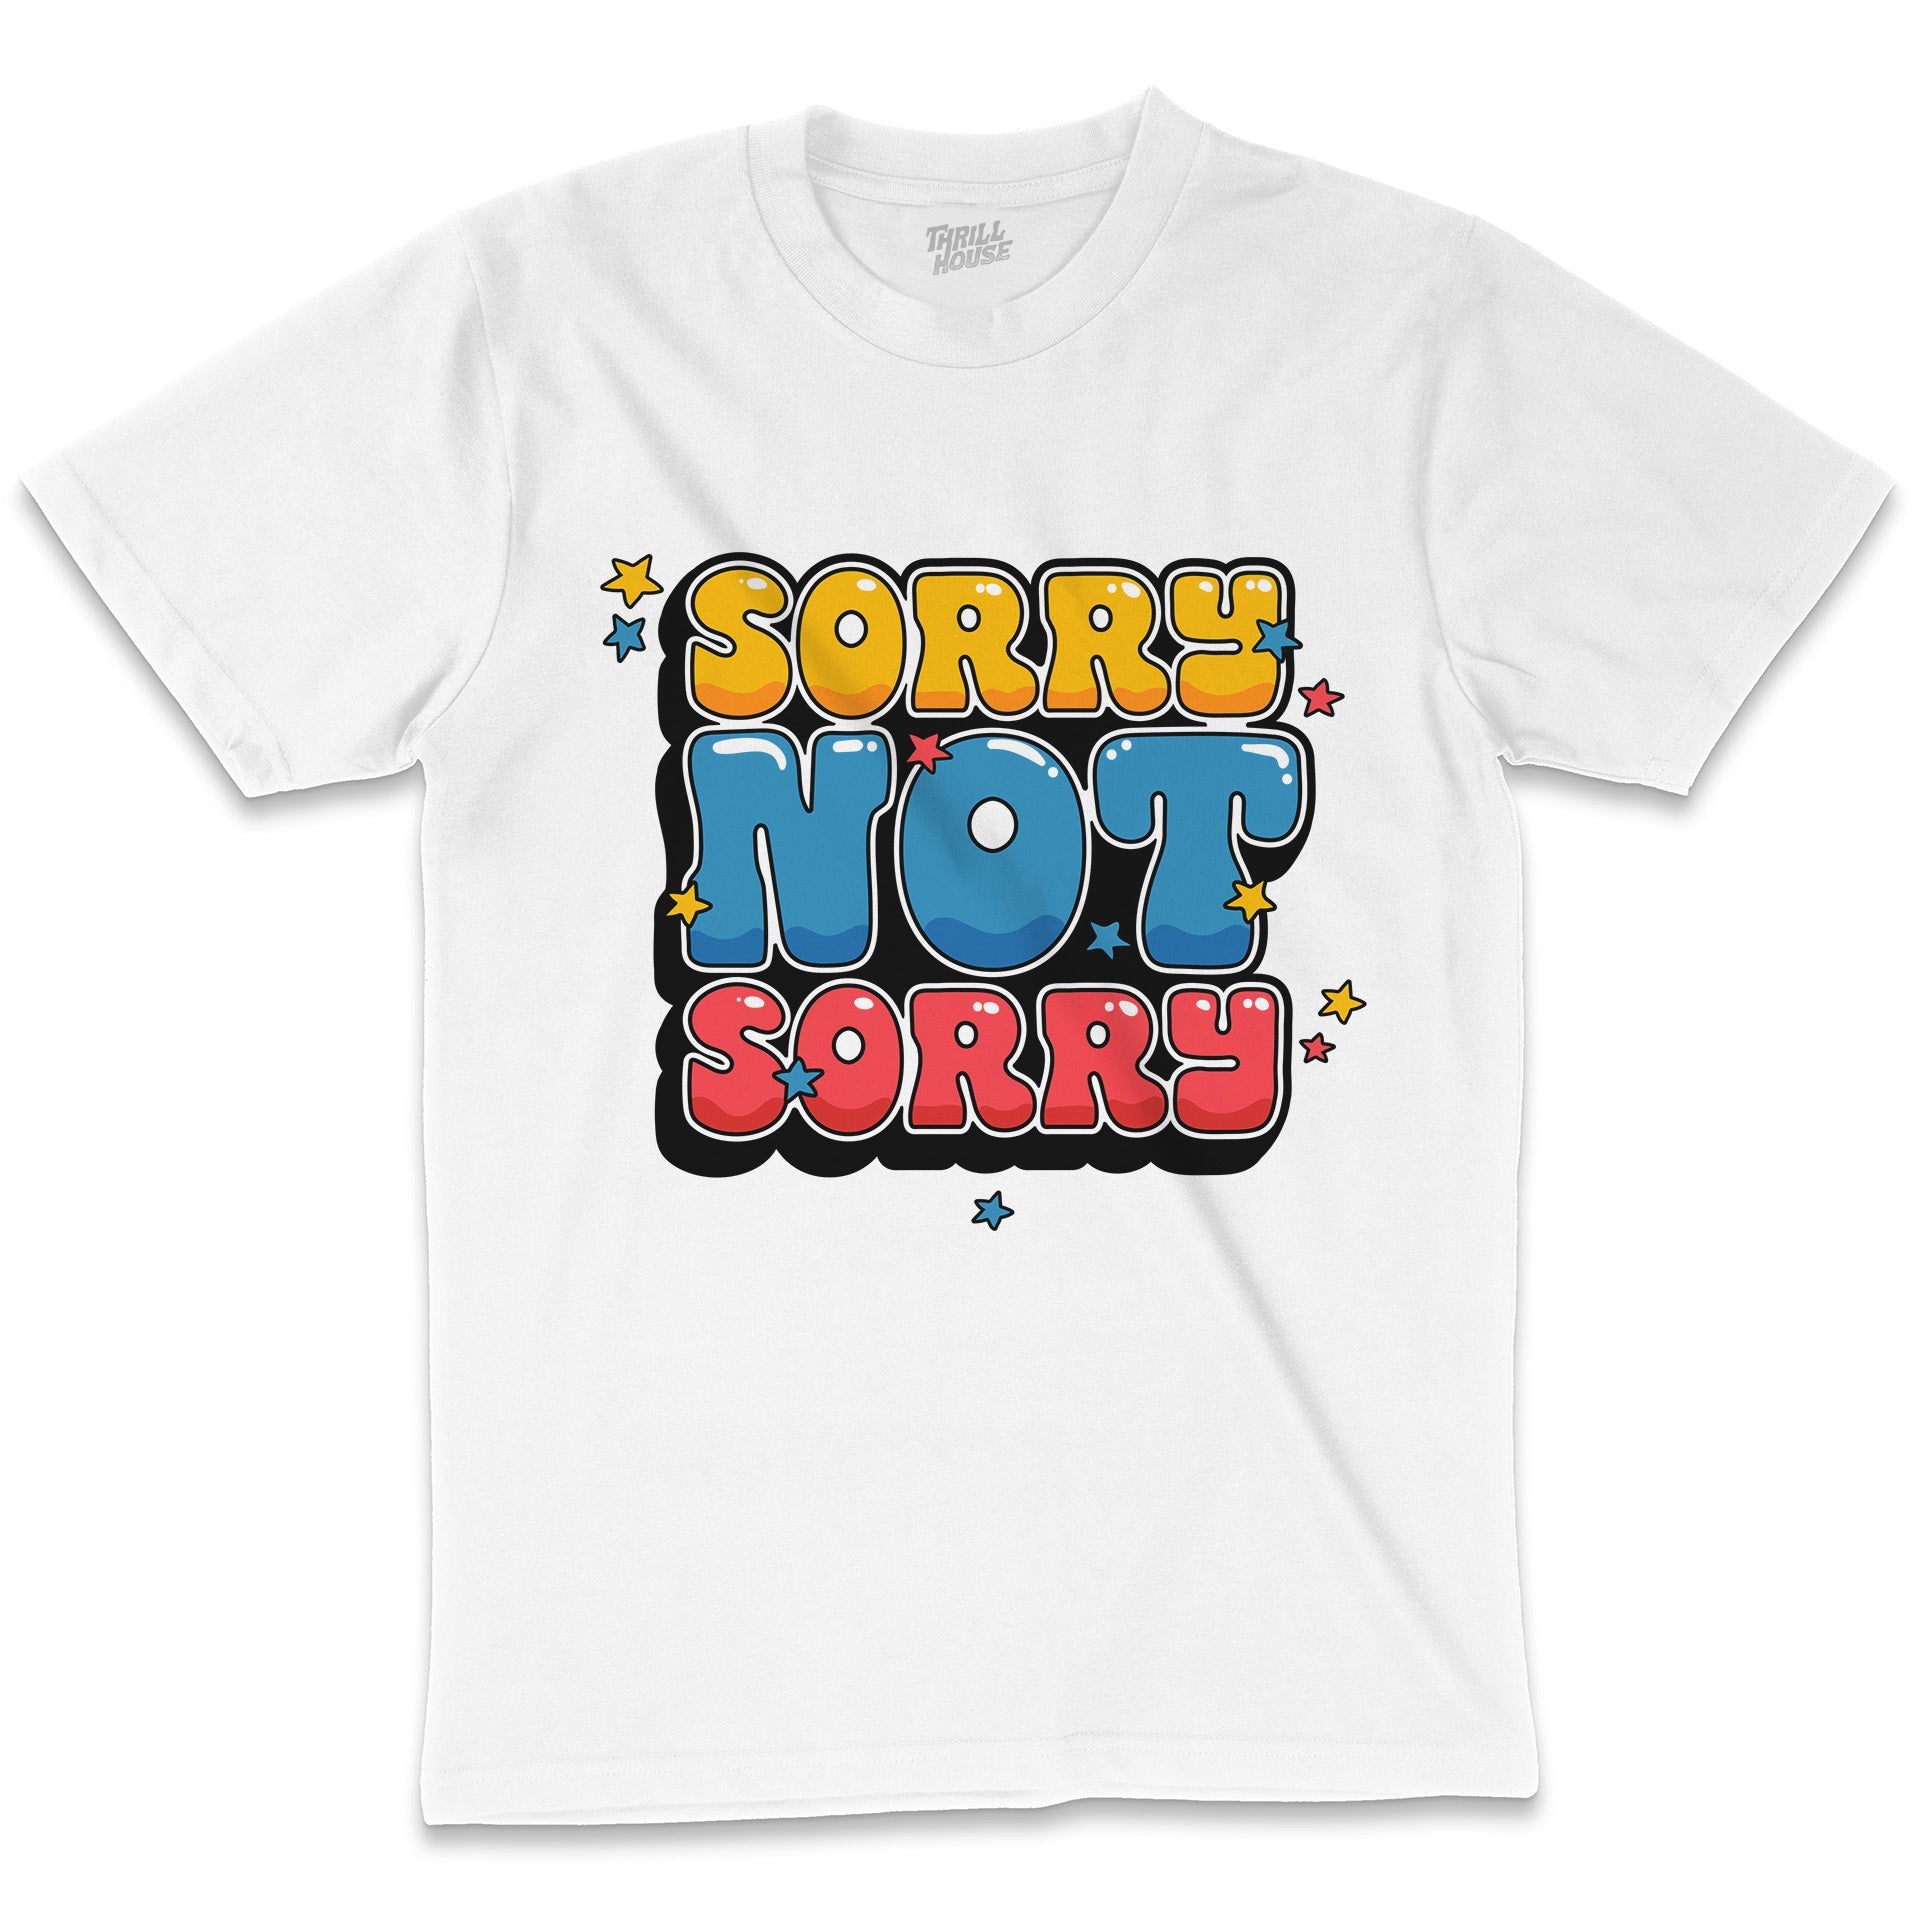 Sorry Not Sorry Funny Anti-Social Slogan Cotton T-Shirt